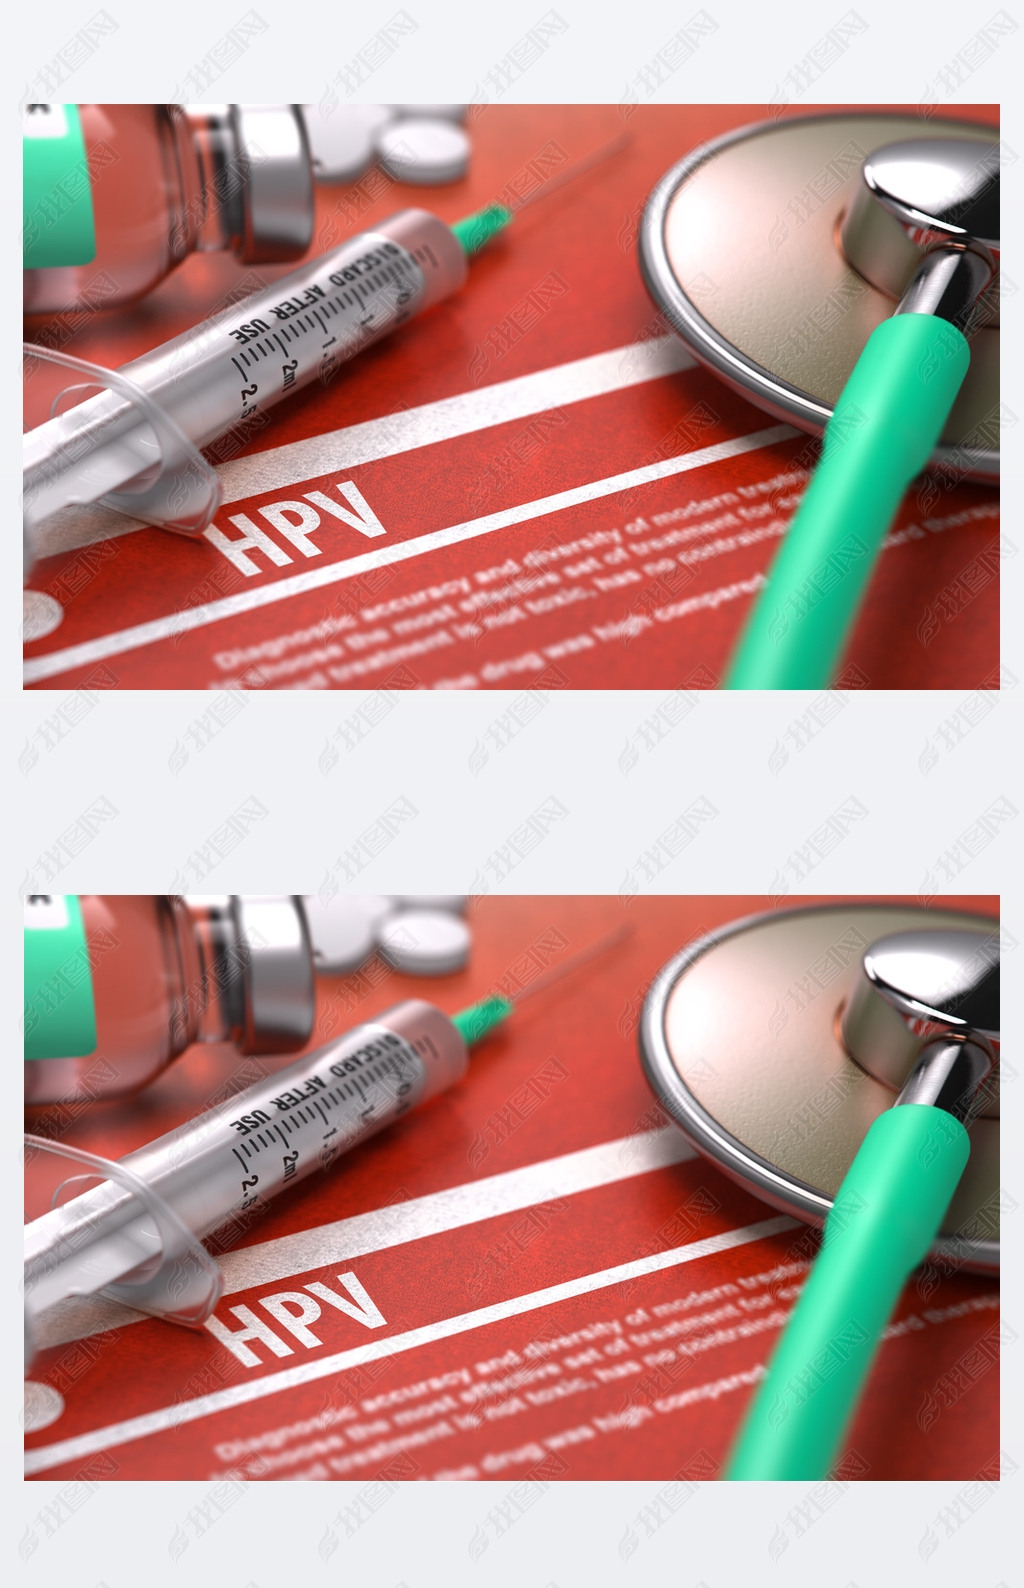 HPV - Printed Diagnosis. Medical Concept.